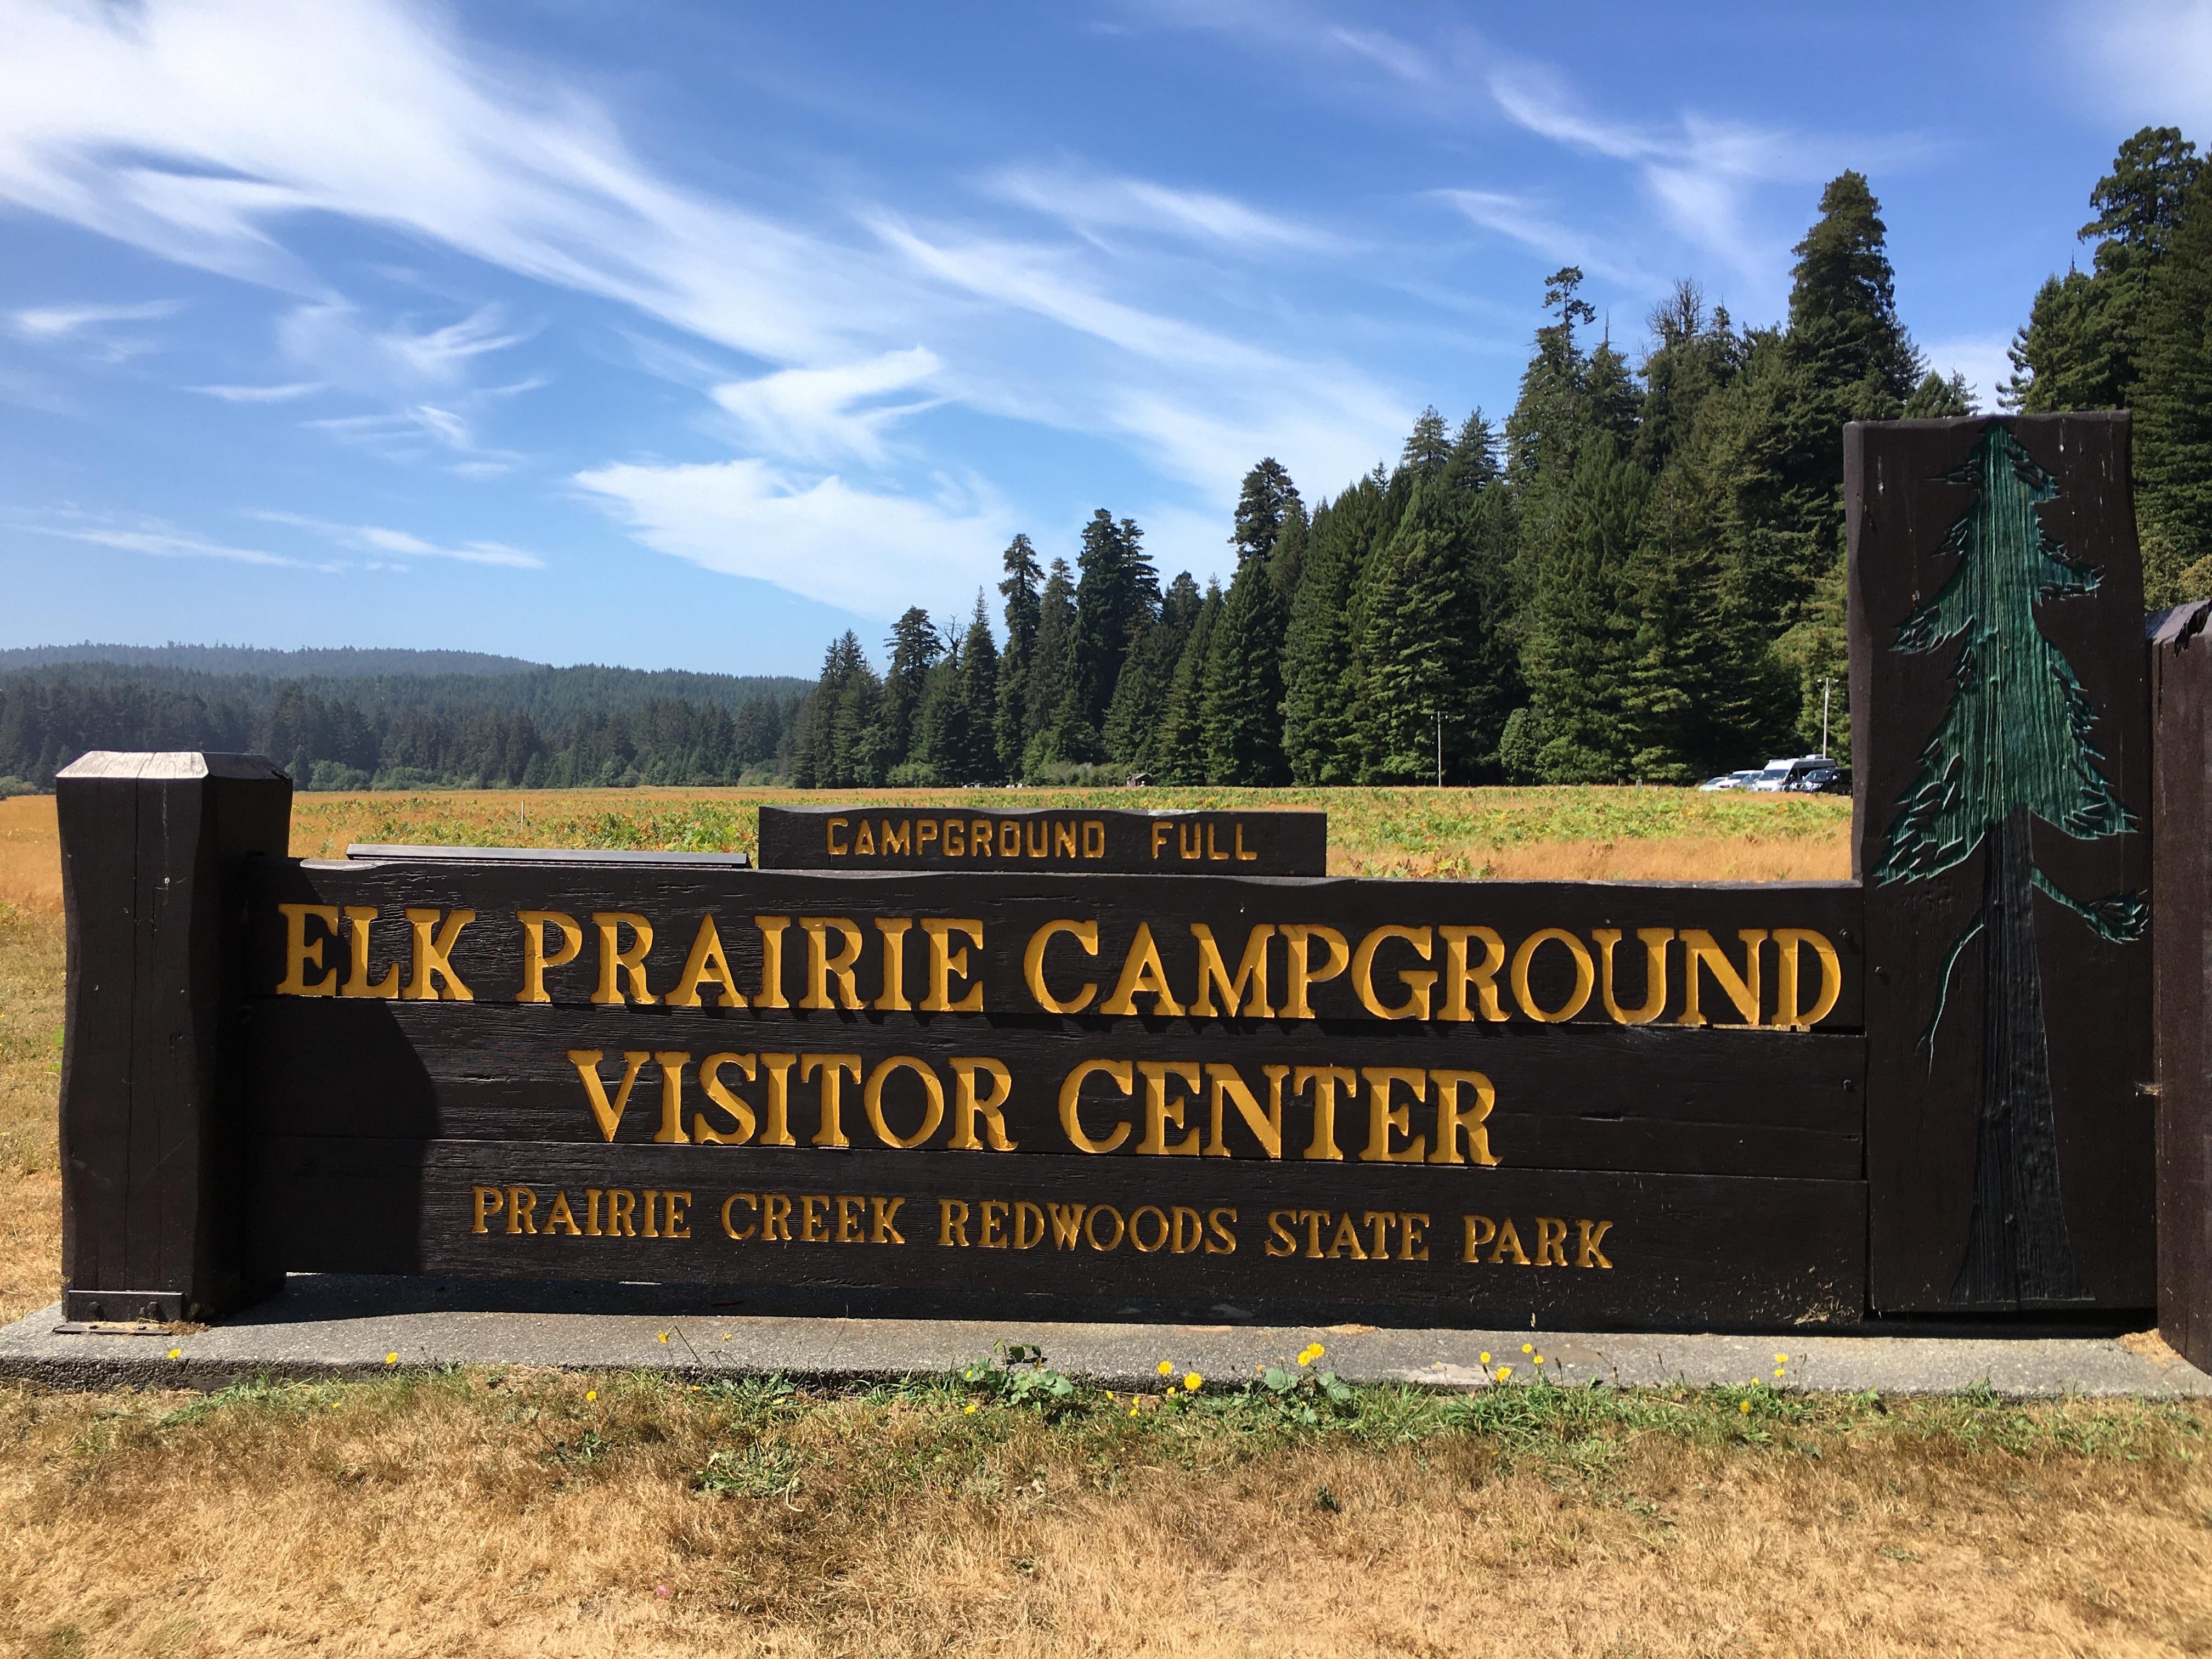 Camper submitted image from Elk Prairie Campground — Prairie Creek Redwoods State Park - 1